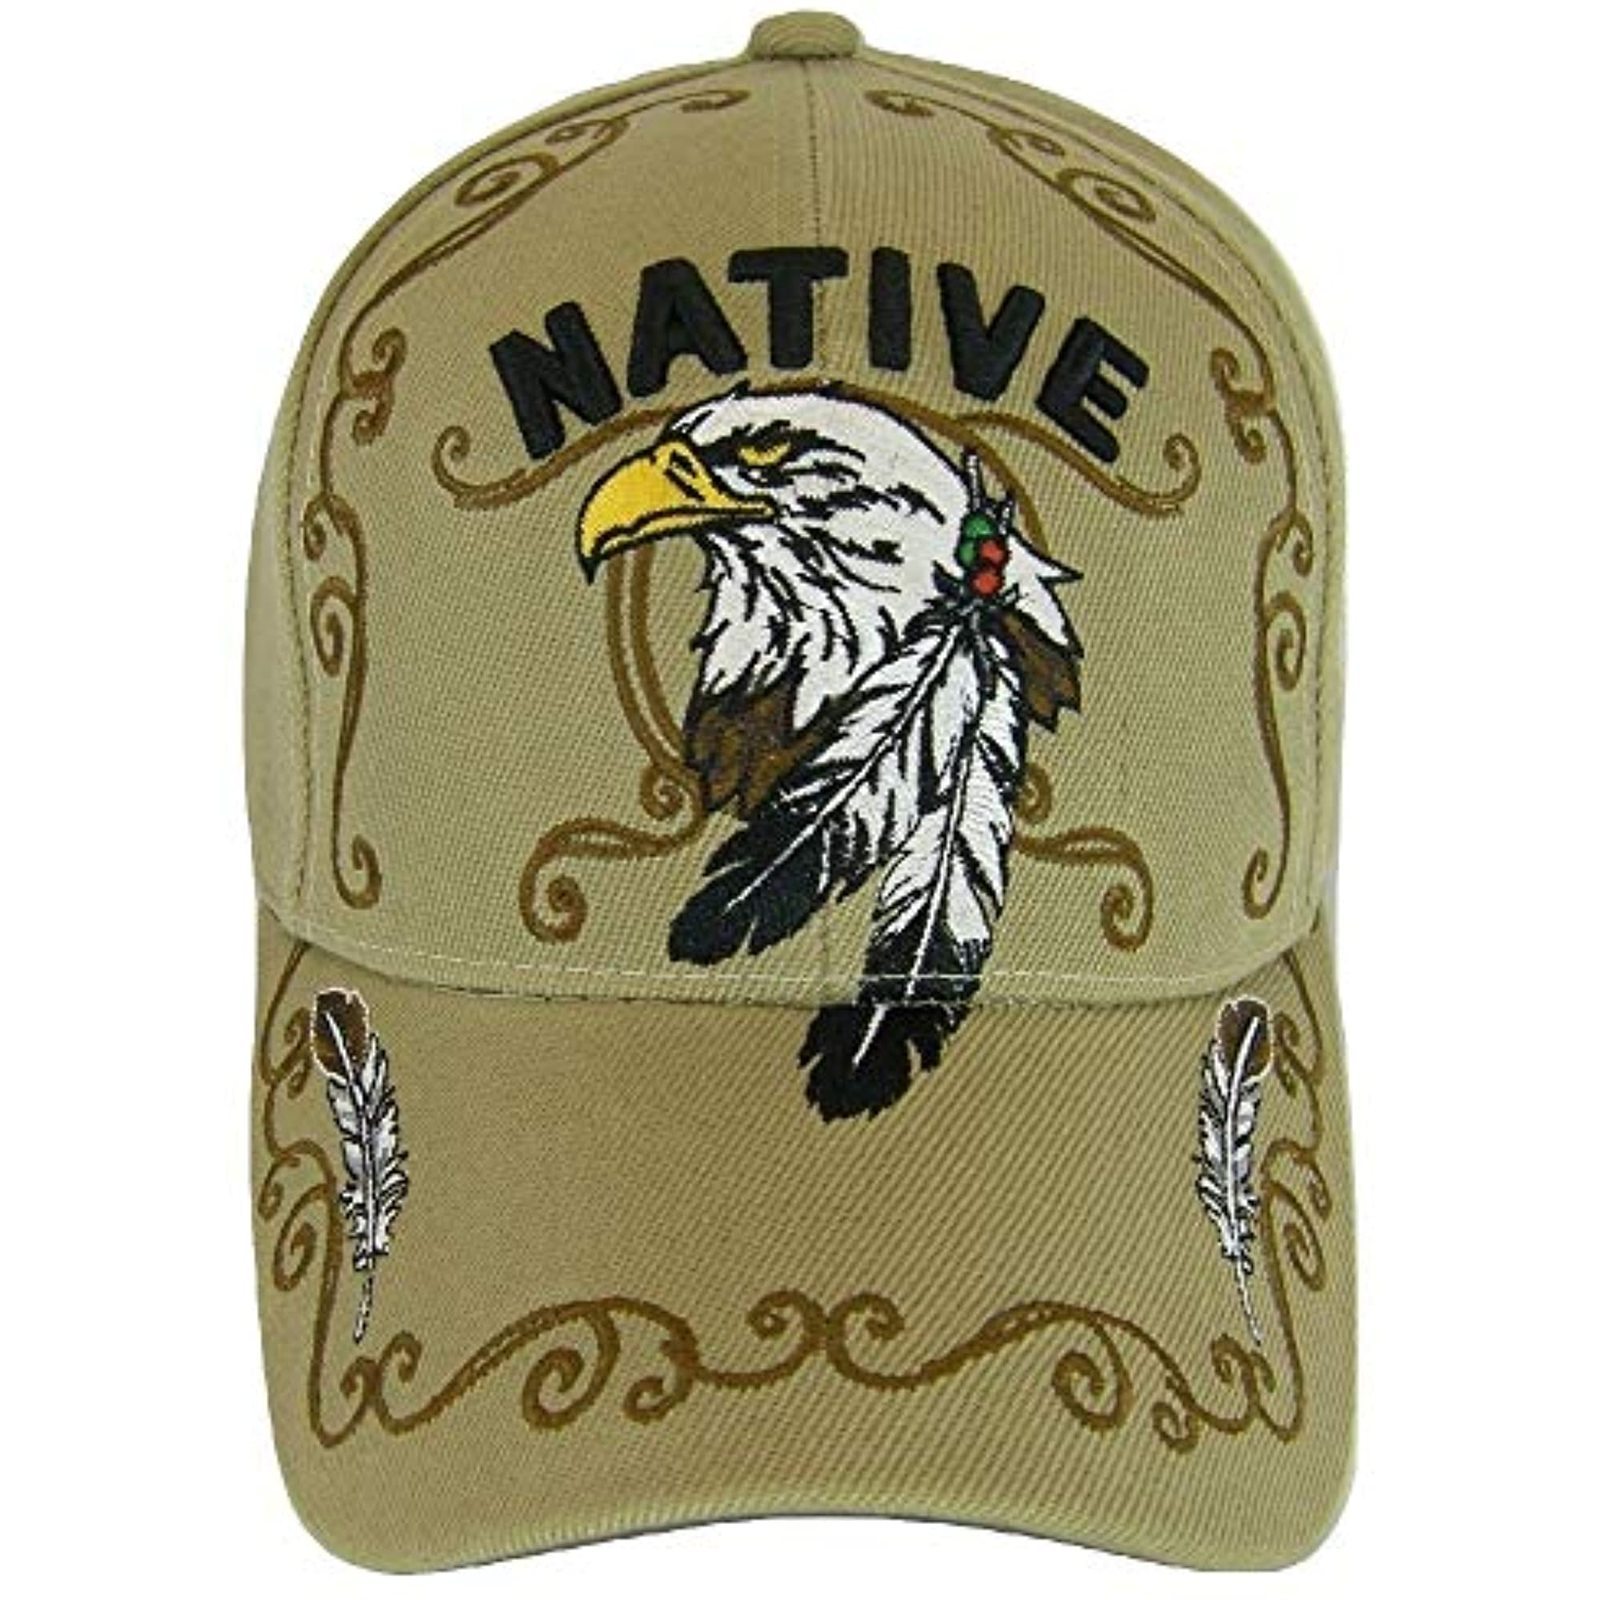 Native Pride Eagle Adjustable Baseball Cap with Feathers and Swirls (Khaki)